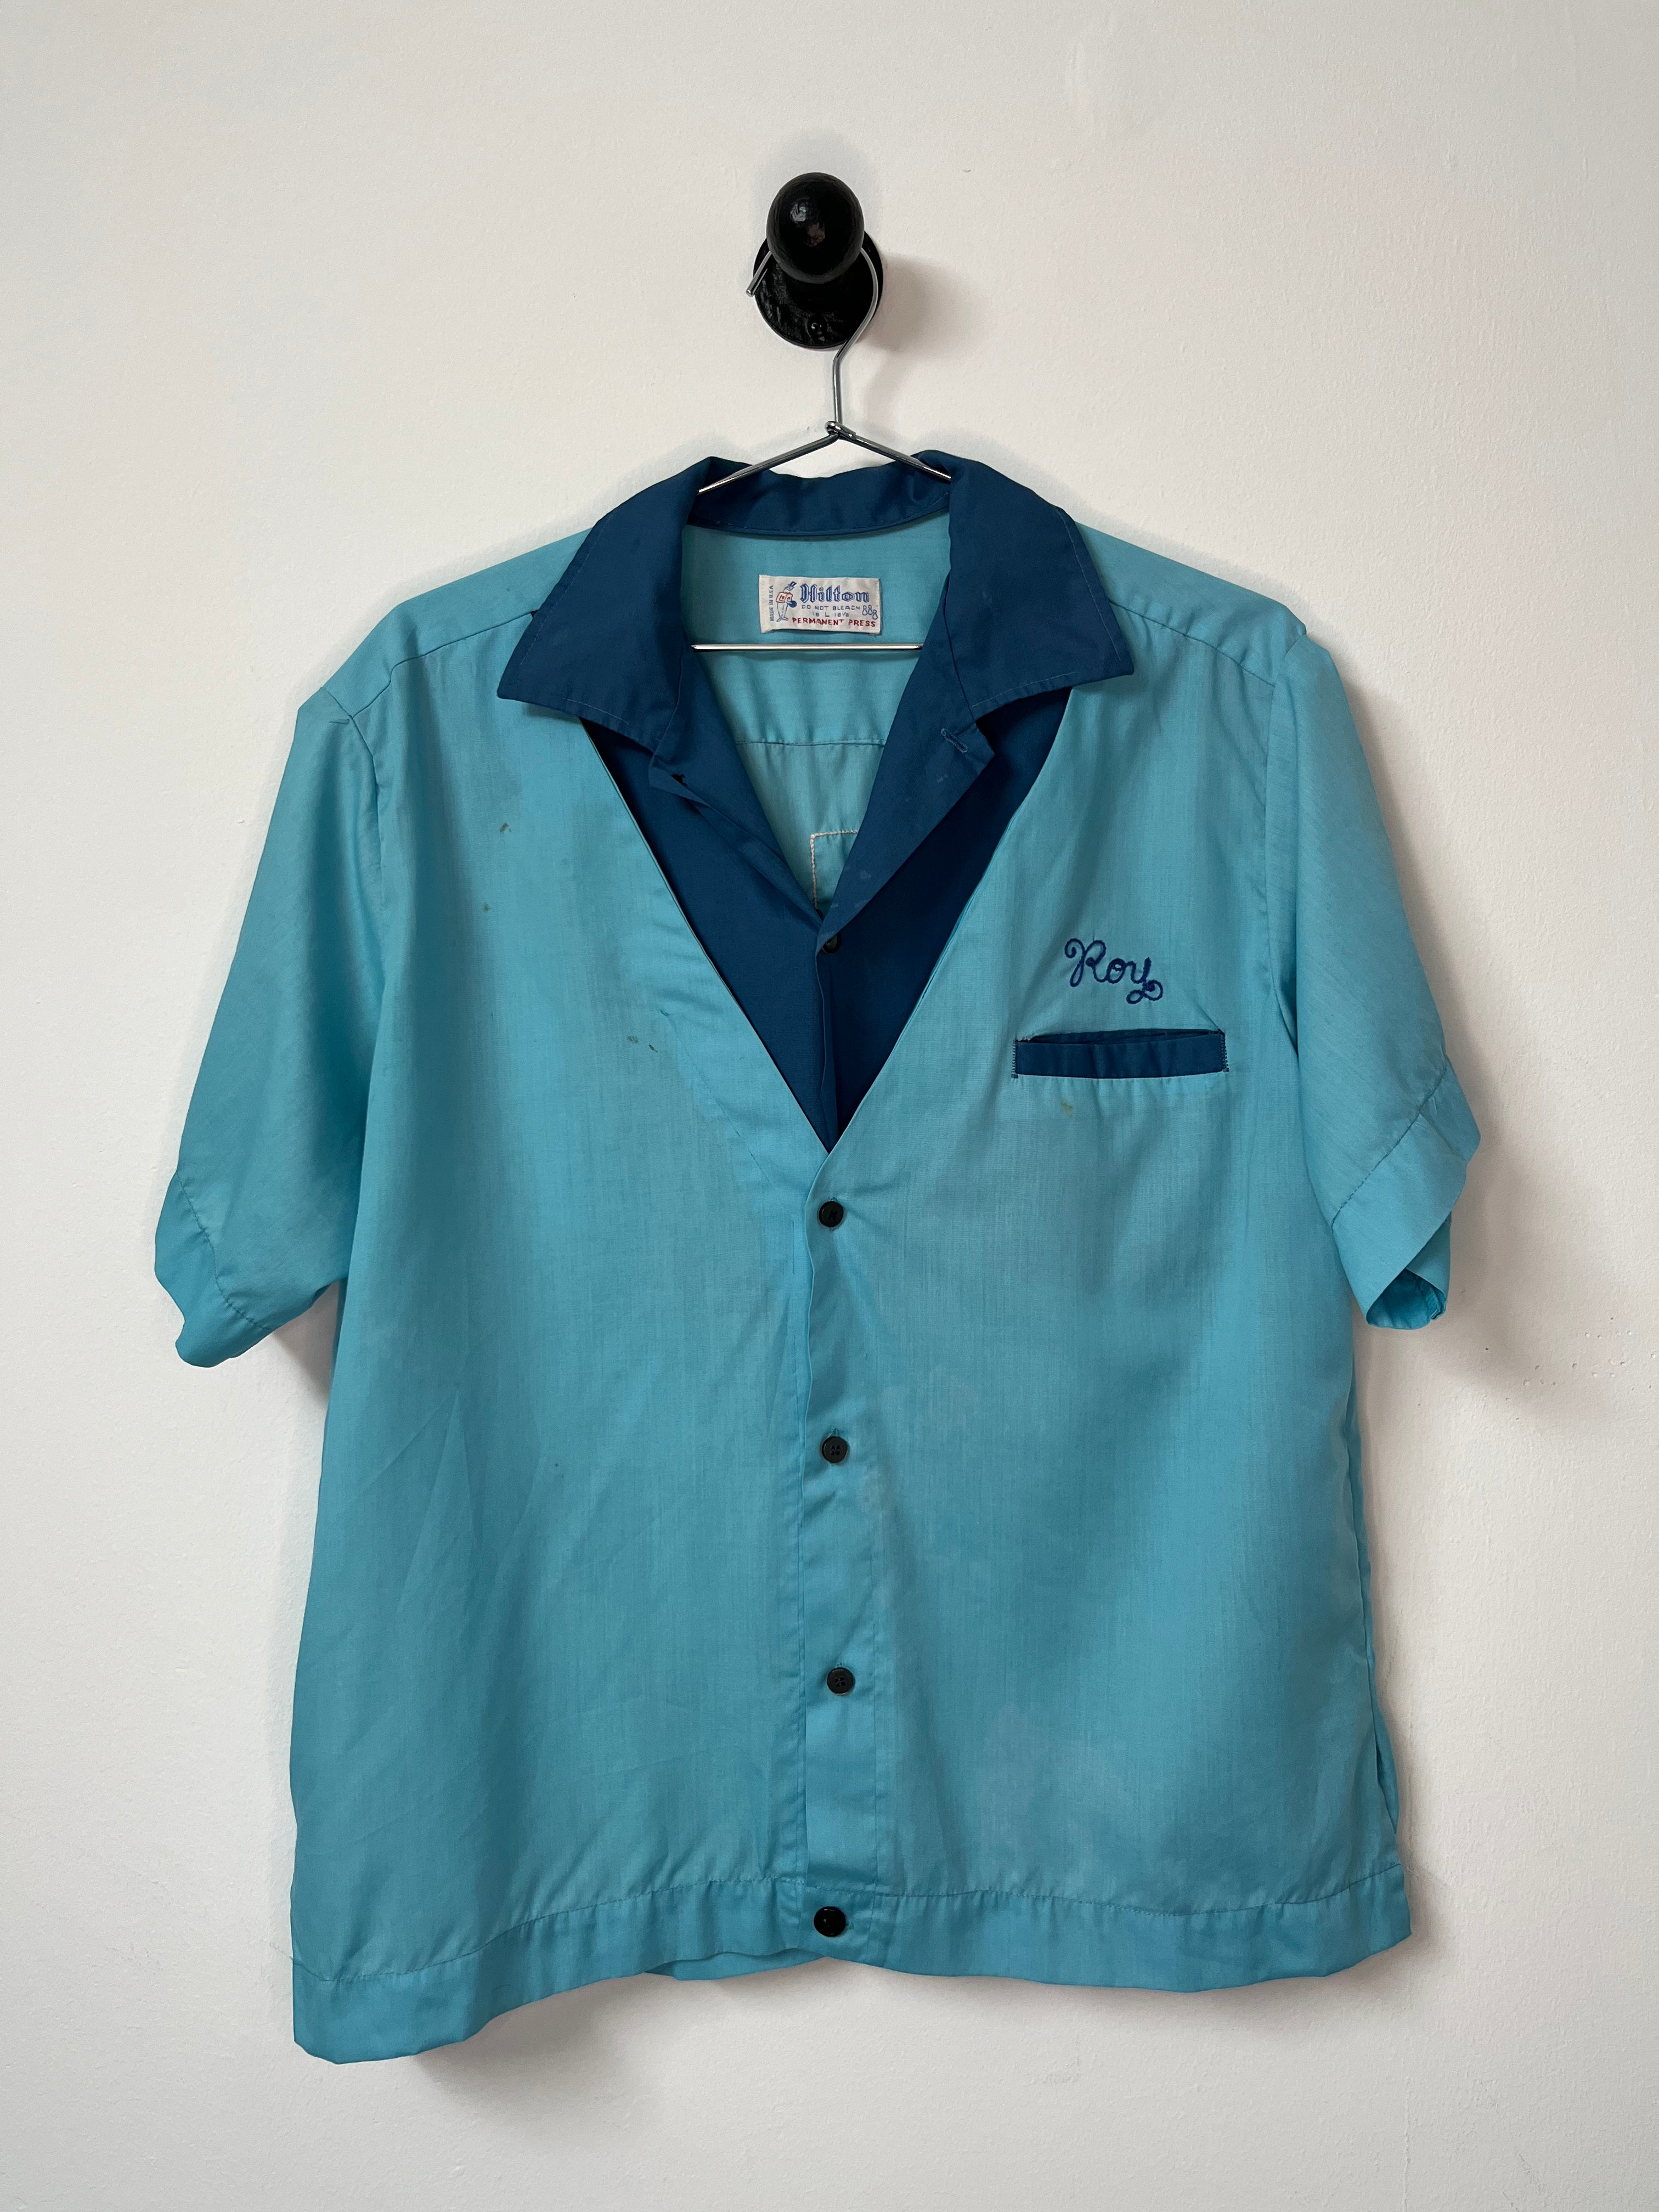 1960s Oakland Trojans Bowling Club Bowling Shirt With Double Layer Collar - Aqua/Blue - M/L